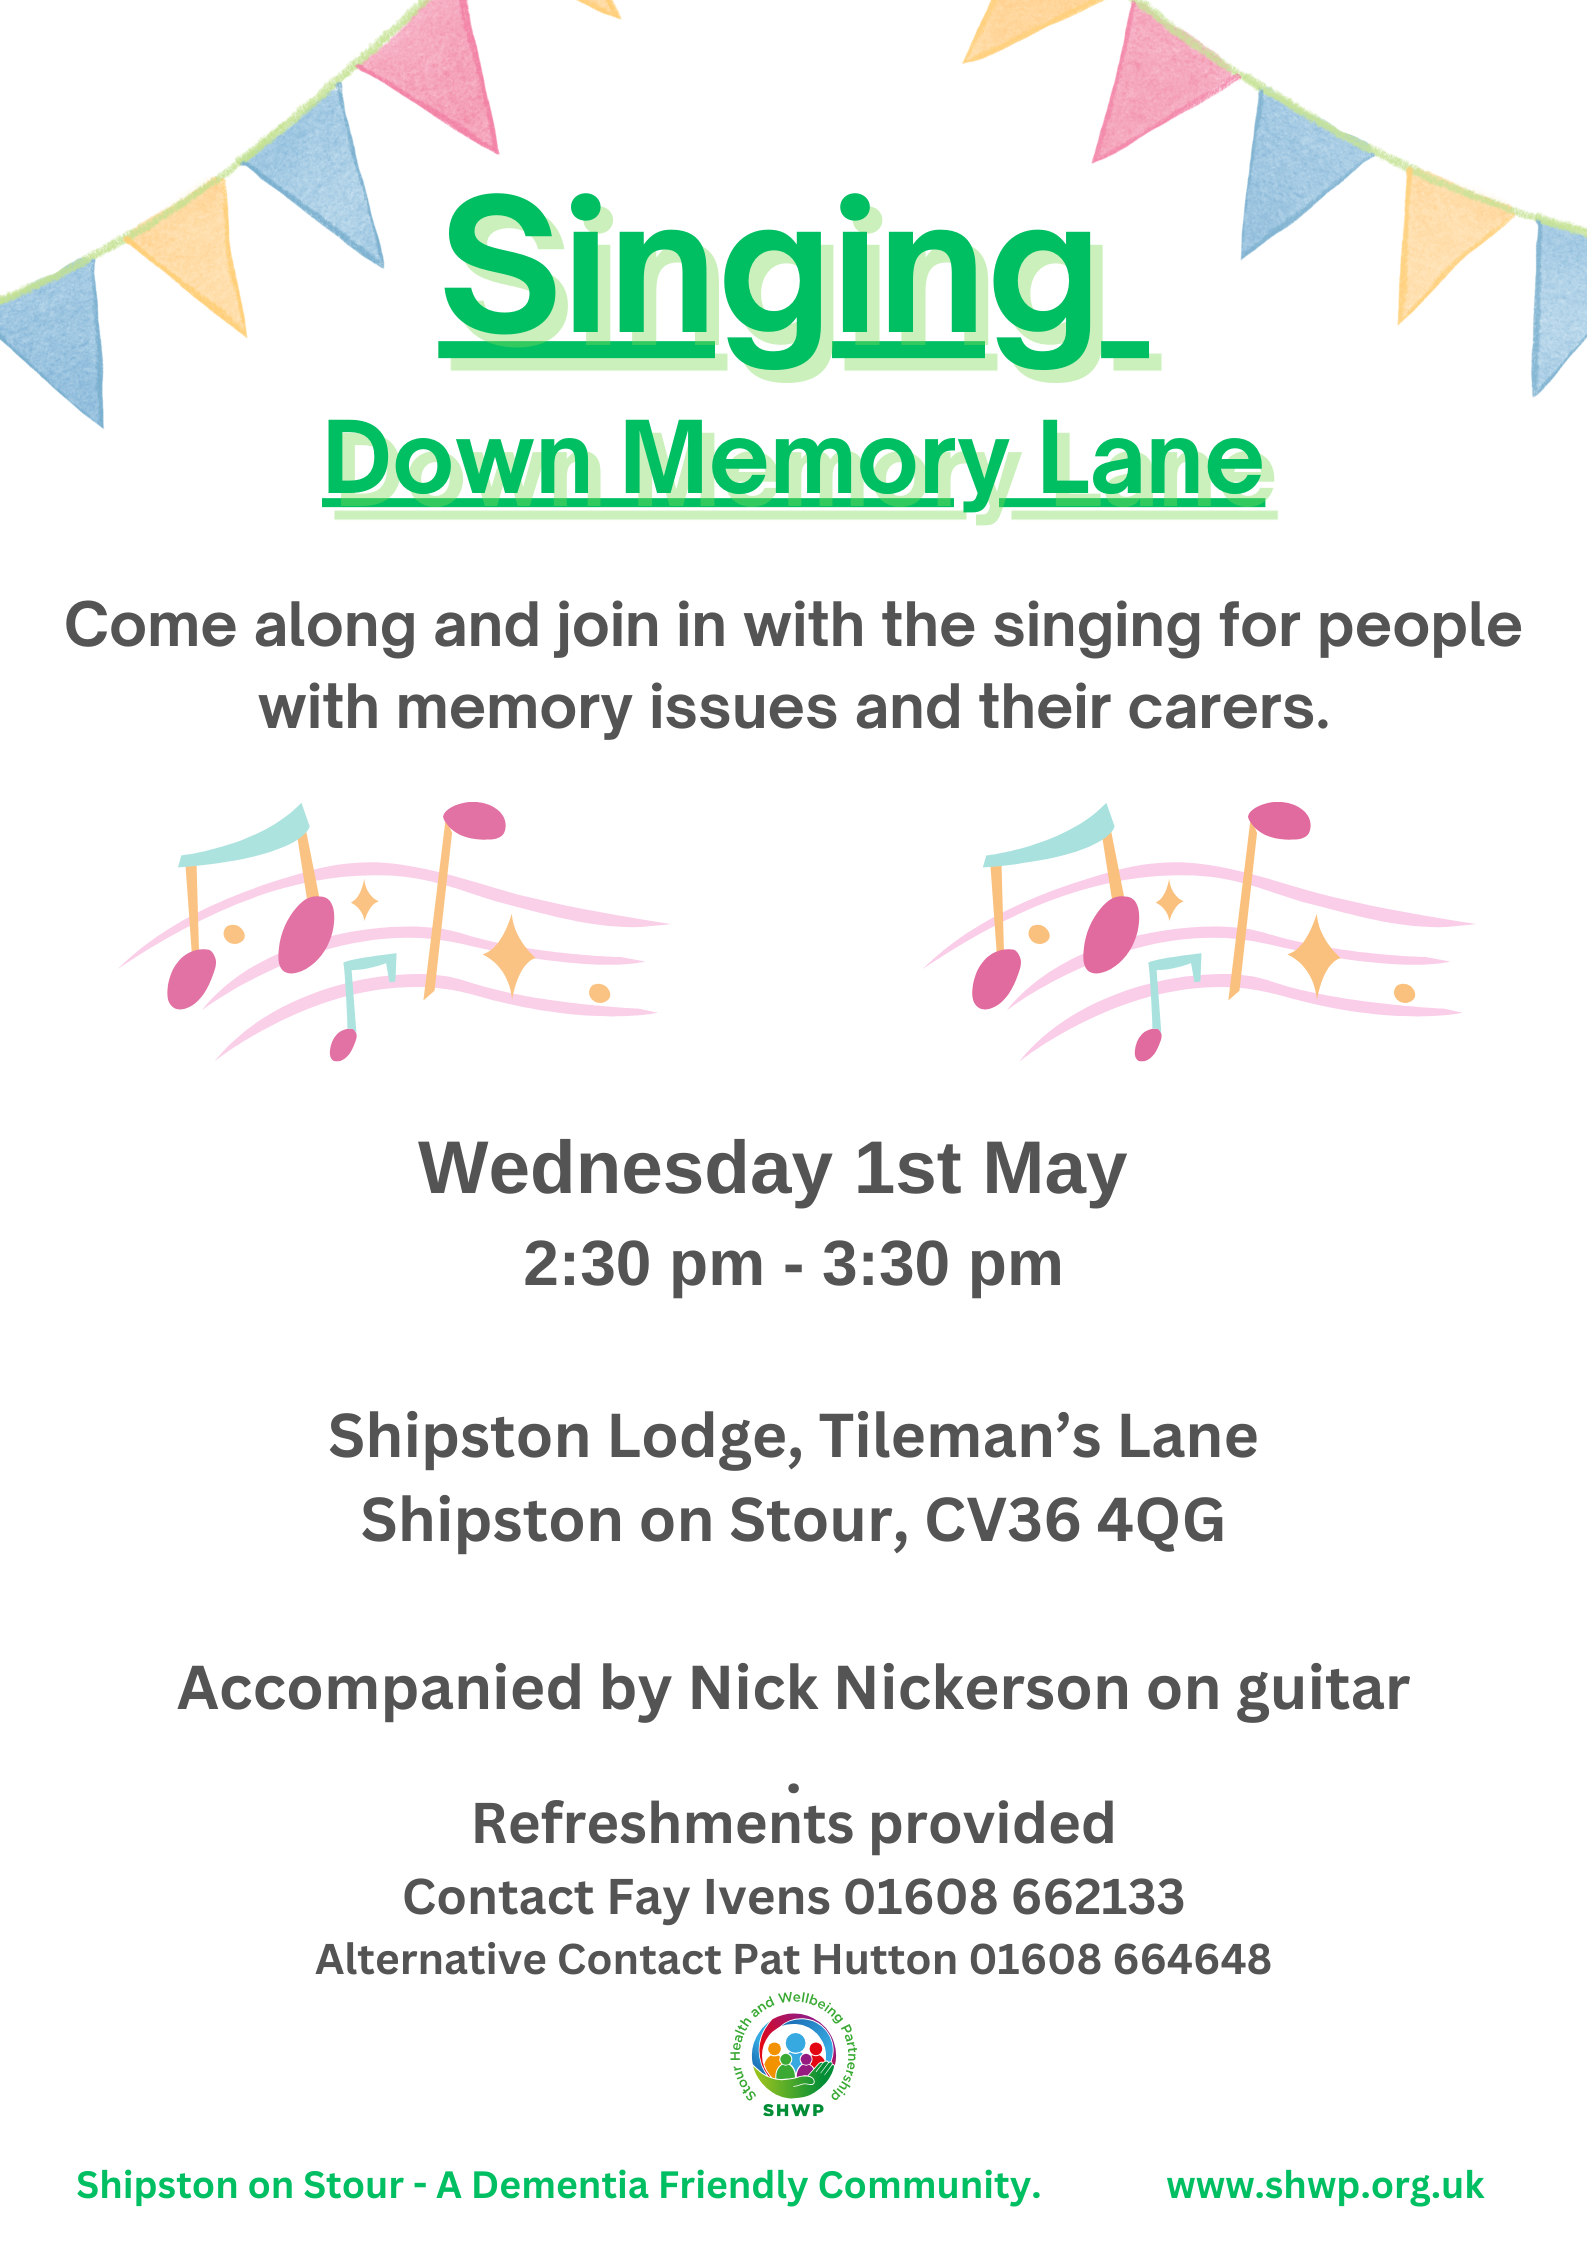 Down Memory Lane Singing at Shipston Lodge on Wednesday 1 May